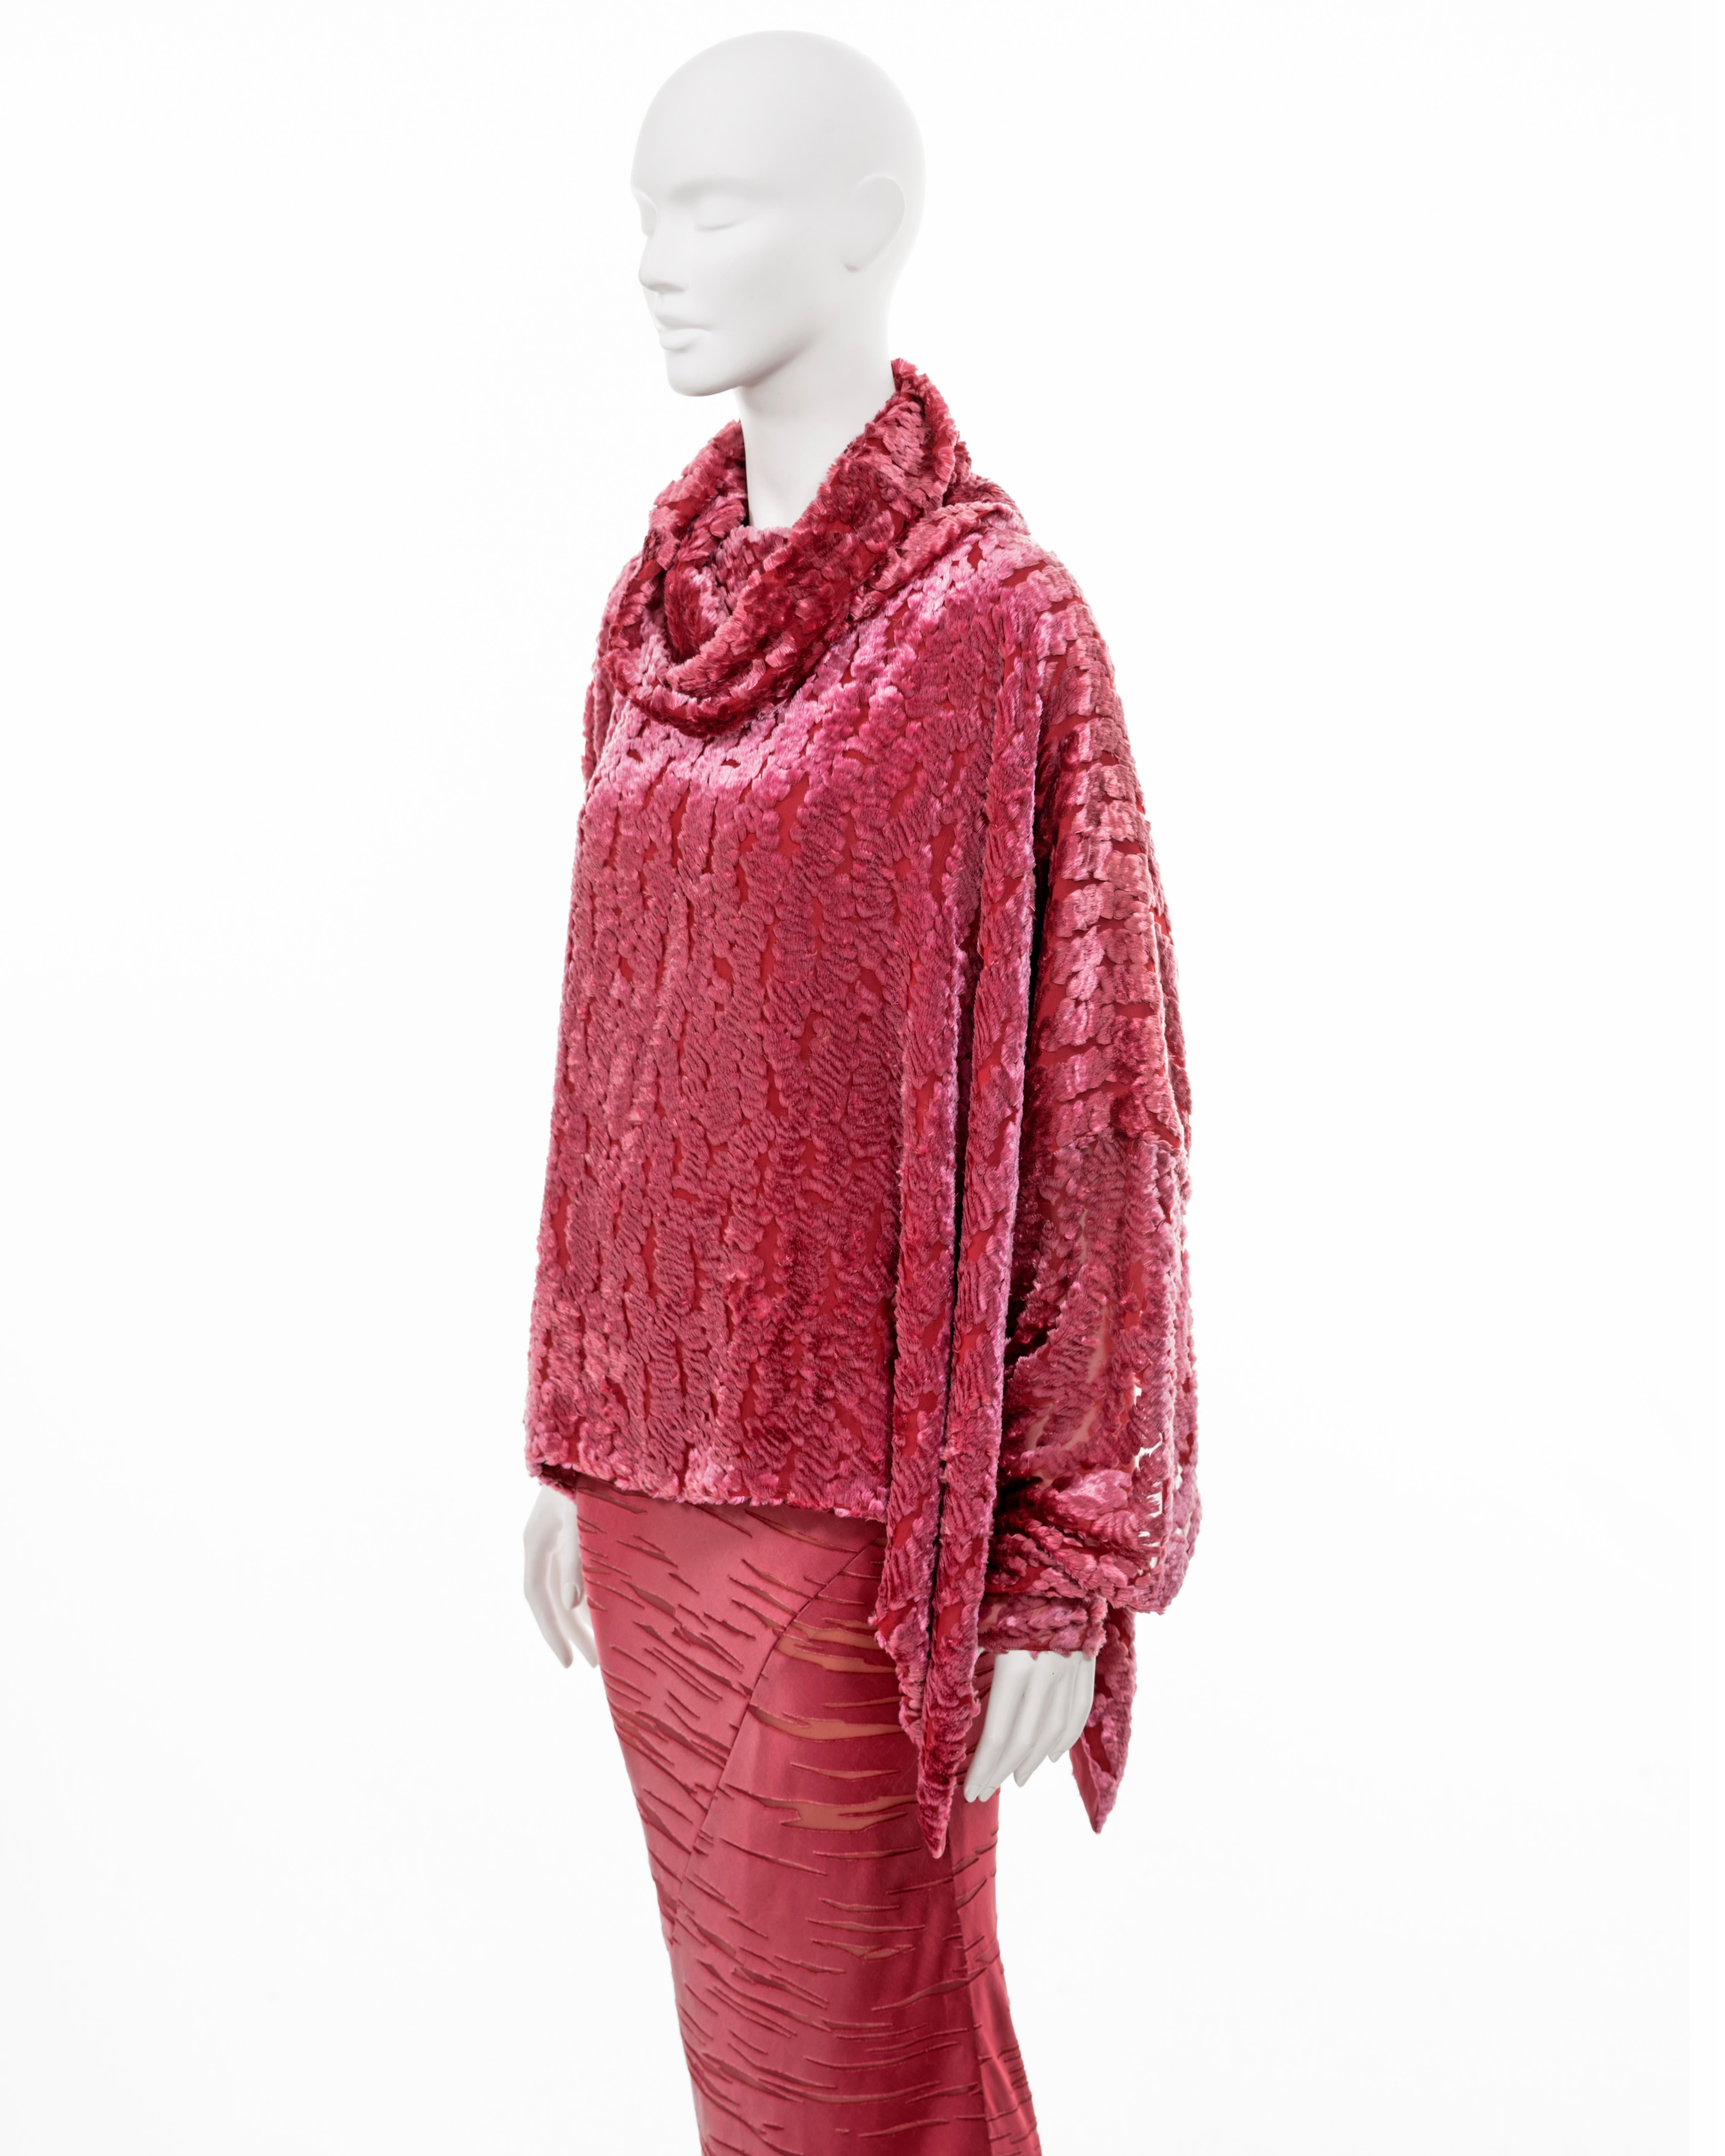 Christian Dior by John Galliano bias cut evening dress and sweater, fw 2000 3